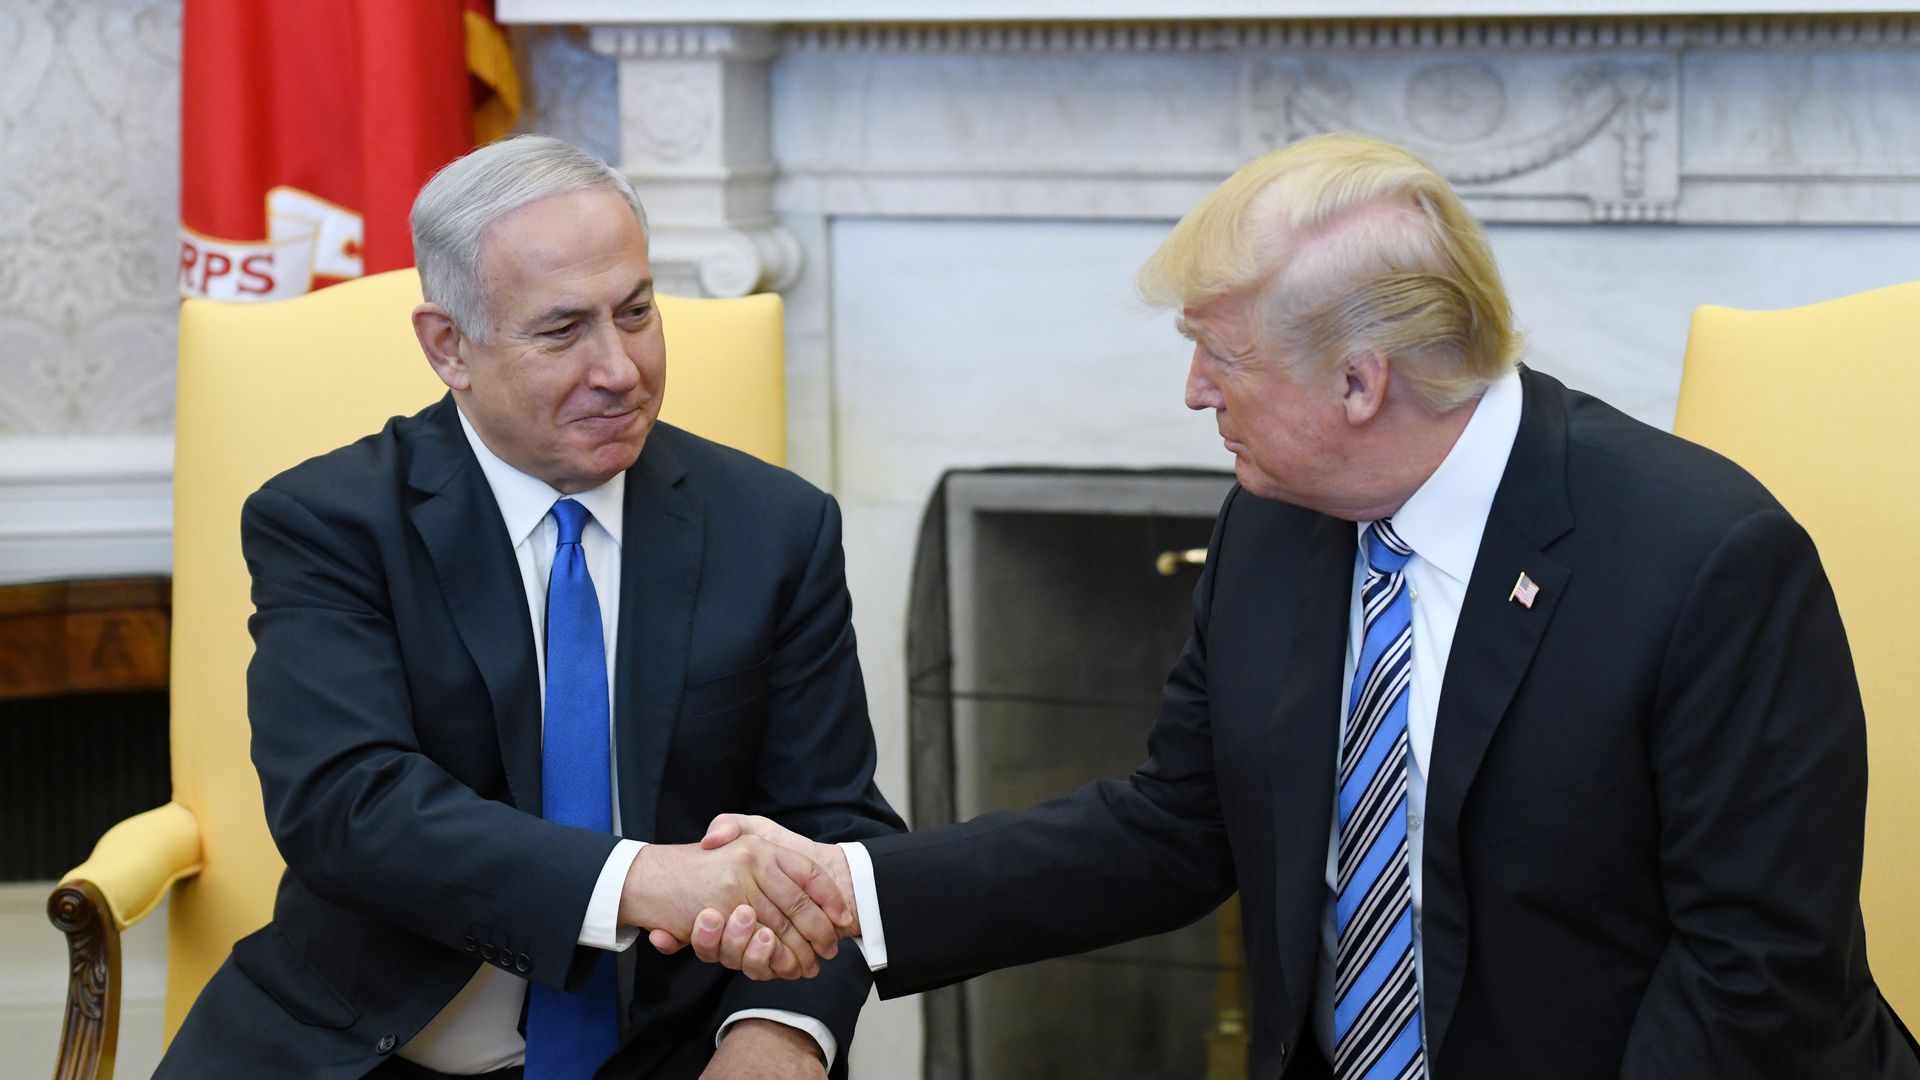 Trump shaking hands with Benjamin Netanyahu